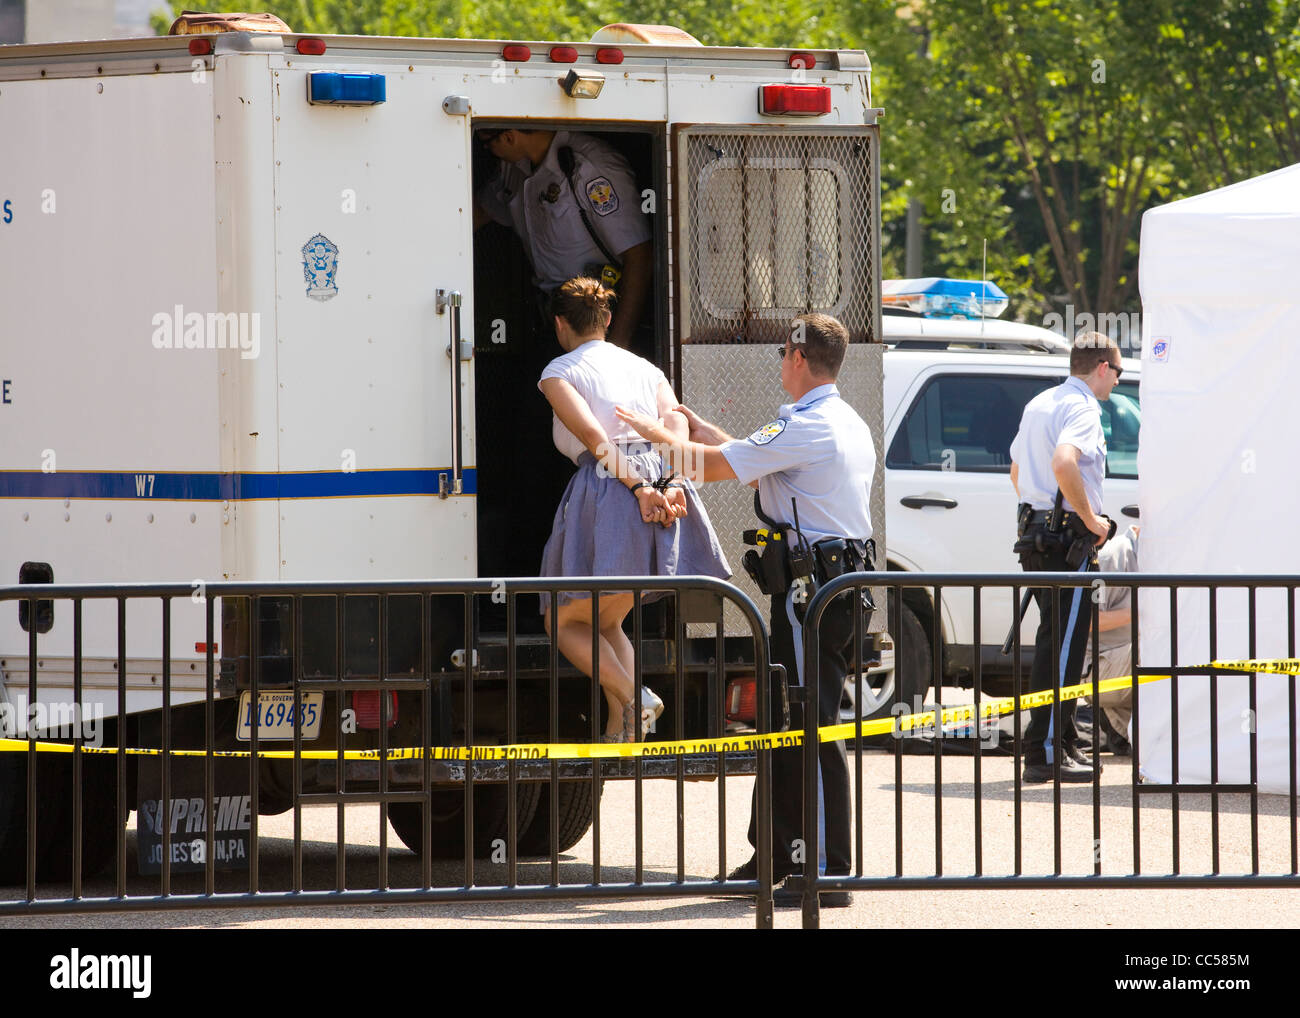 A police detained woman is led into a paddywagon - Washington, DC USA Stock Photo